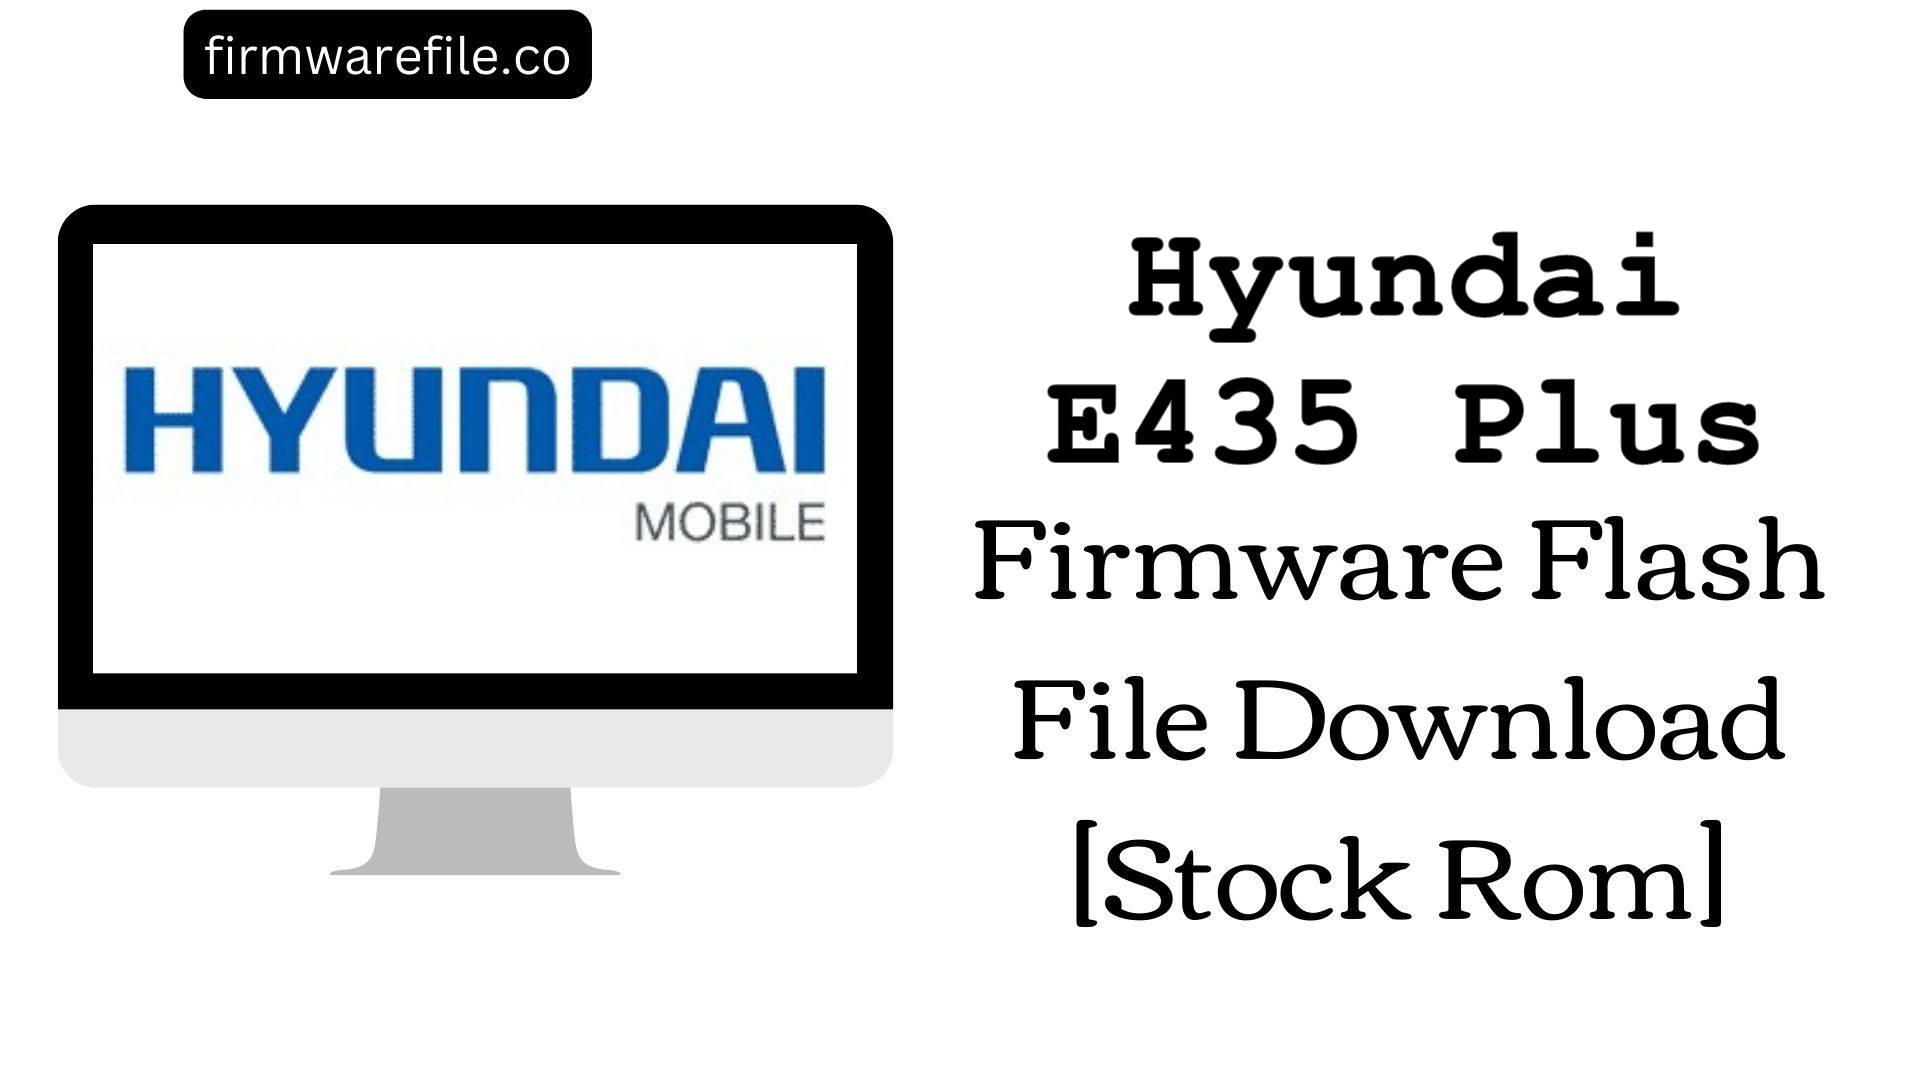 Hyundai E435 Plus